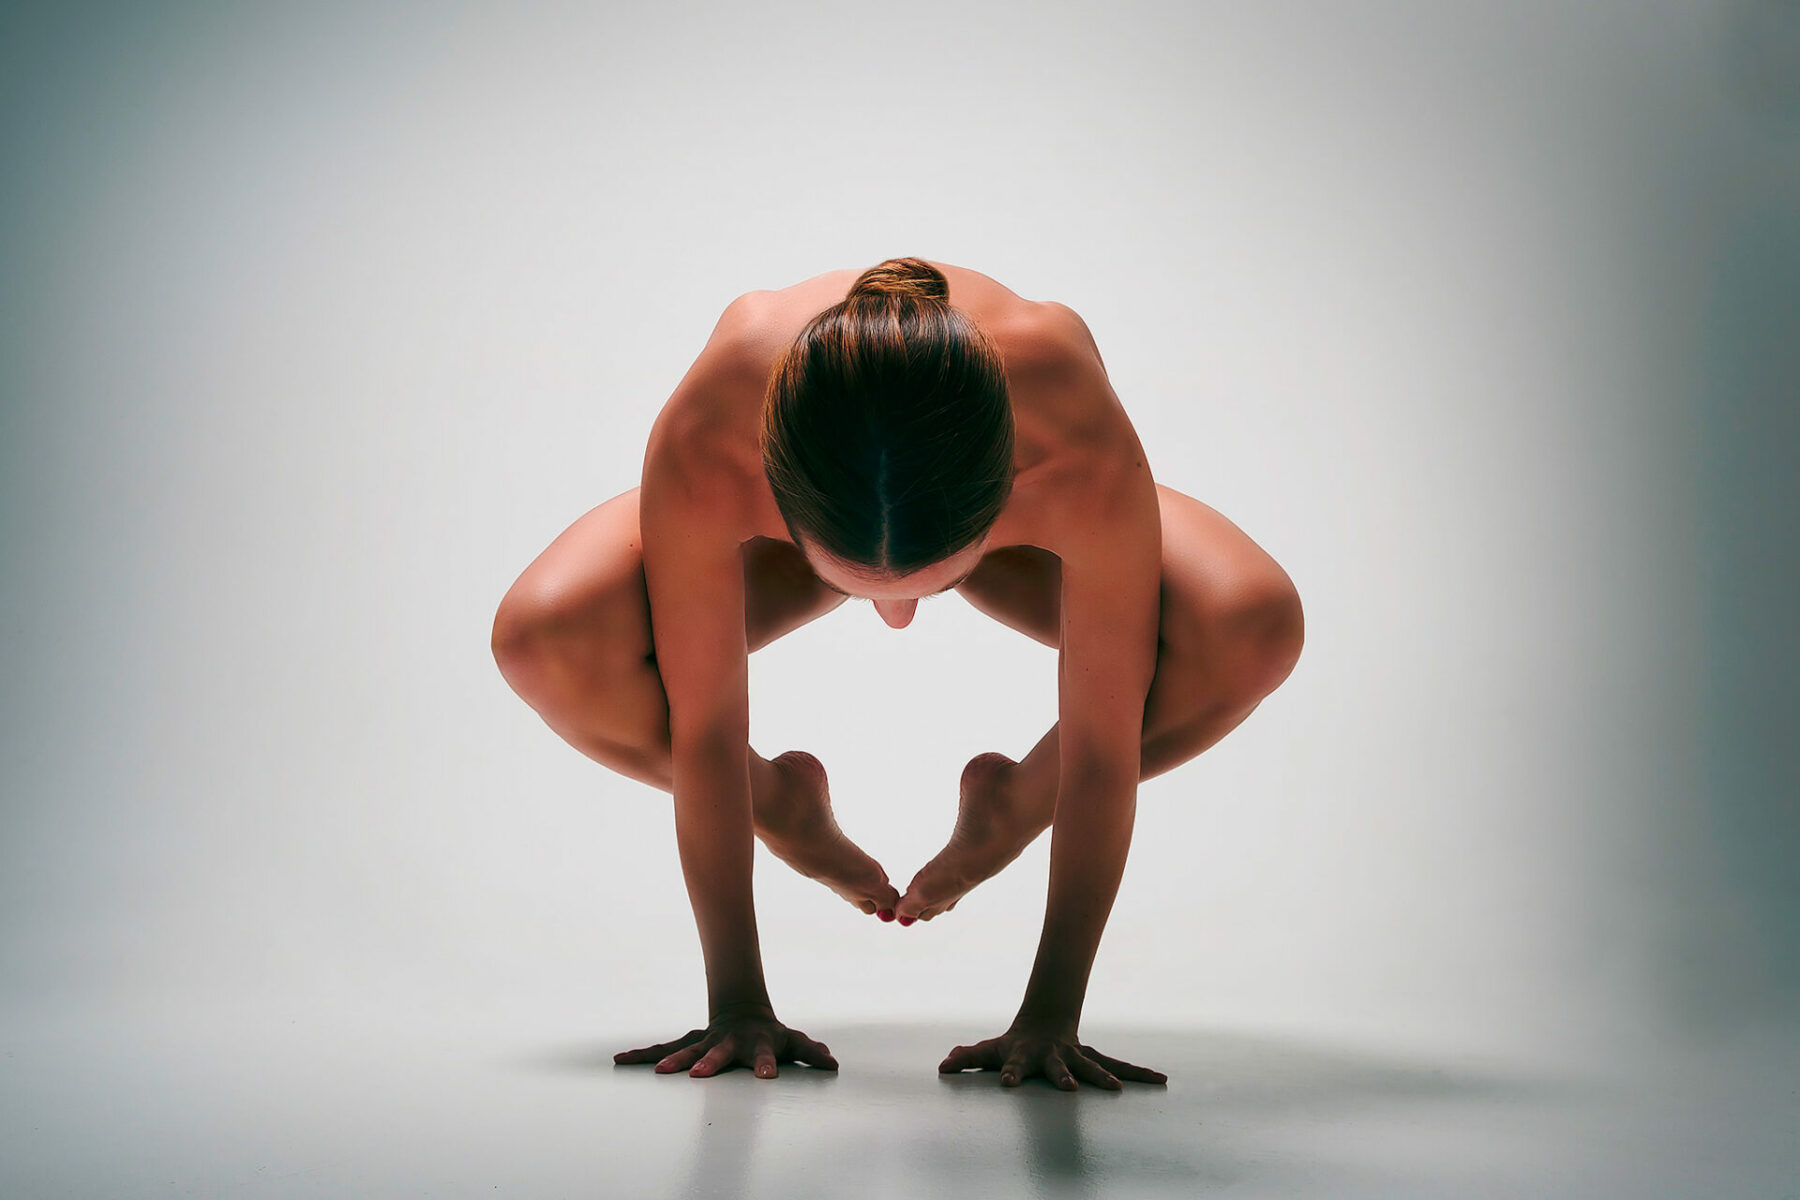 Studio B 07 Photographe Libourne Charming Girl Demonstrates Stretching Yoga Asanas Photo Studio 3